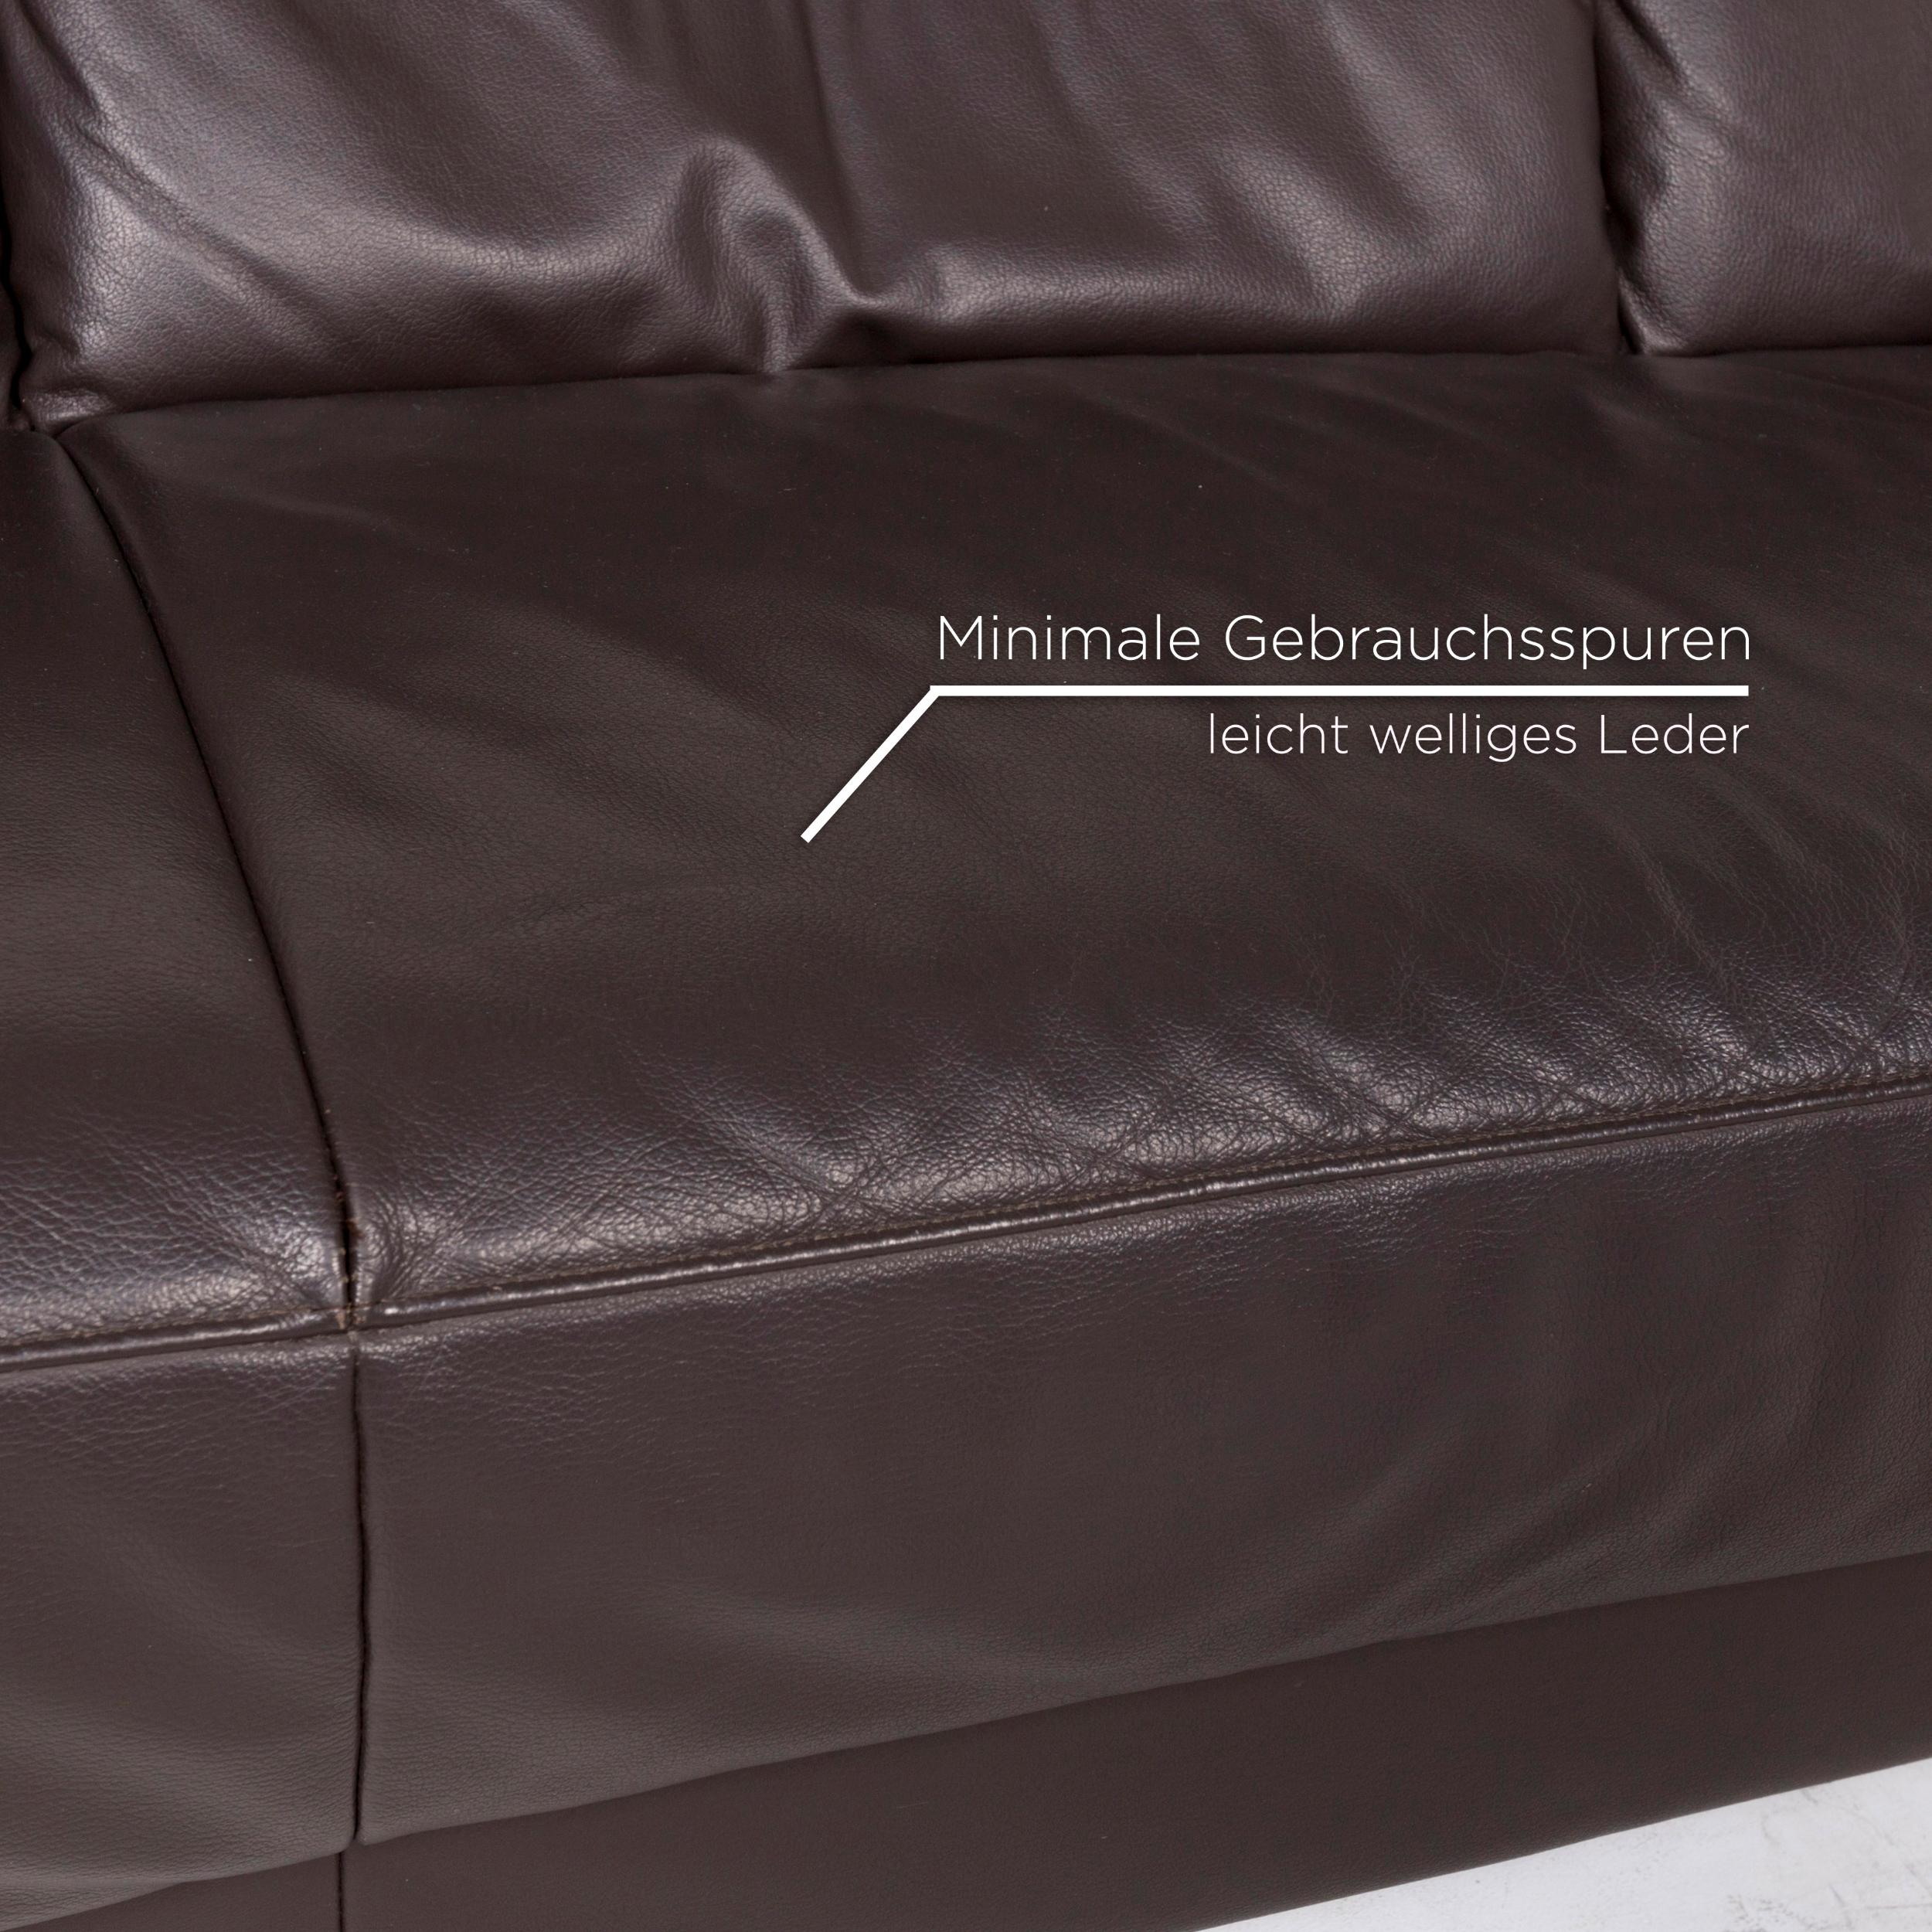 brown leather corner sofa